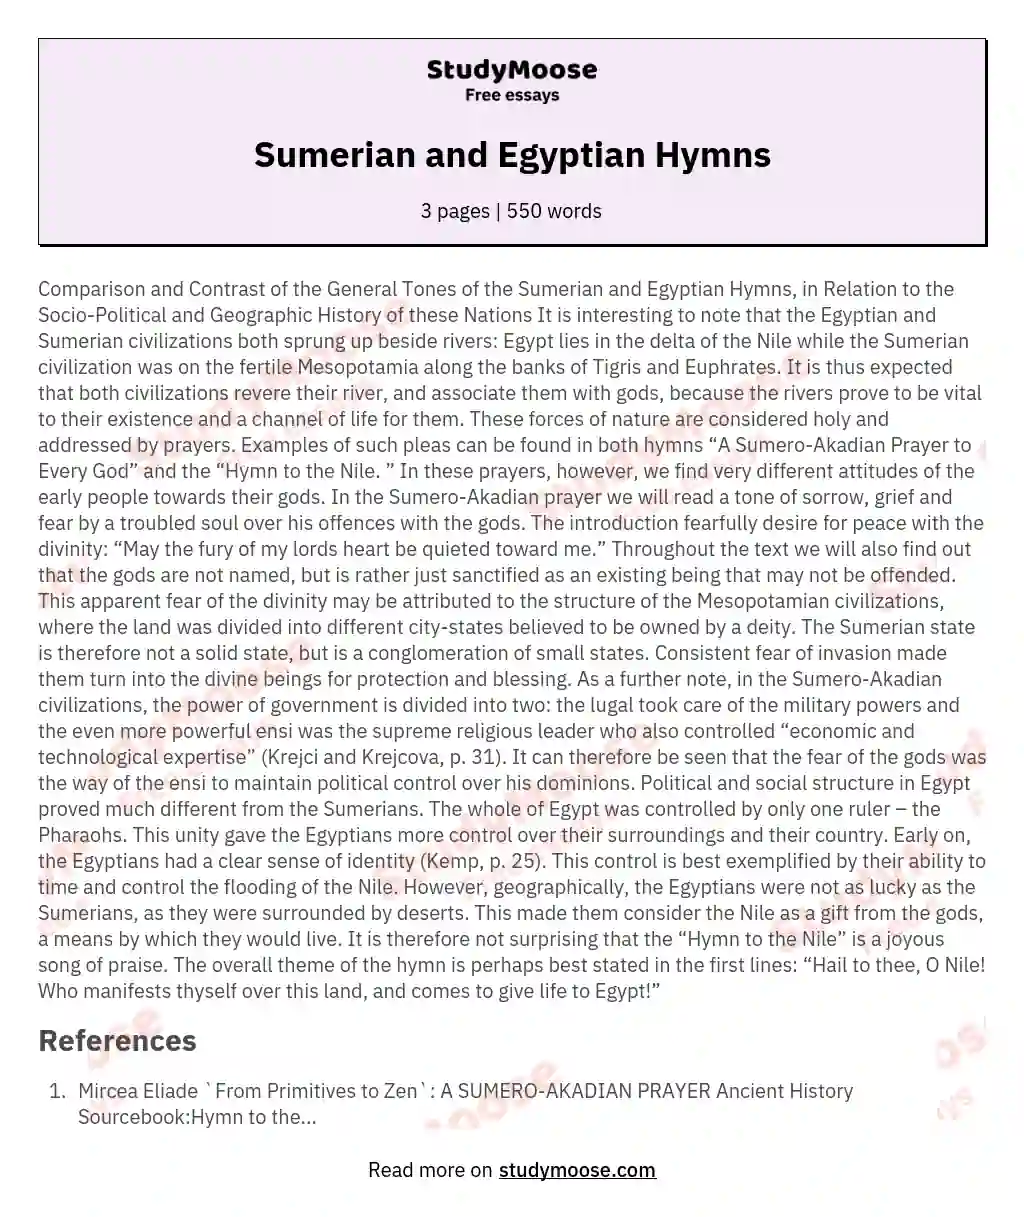 Sumerian and Egyptian Hymns essay